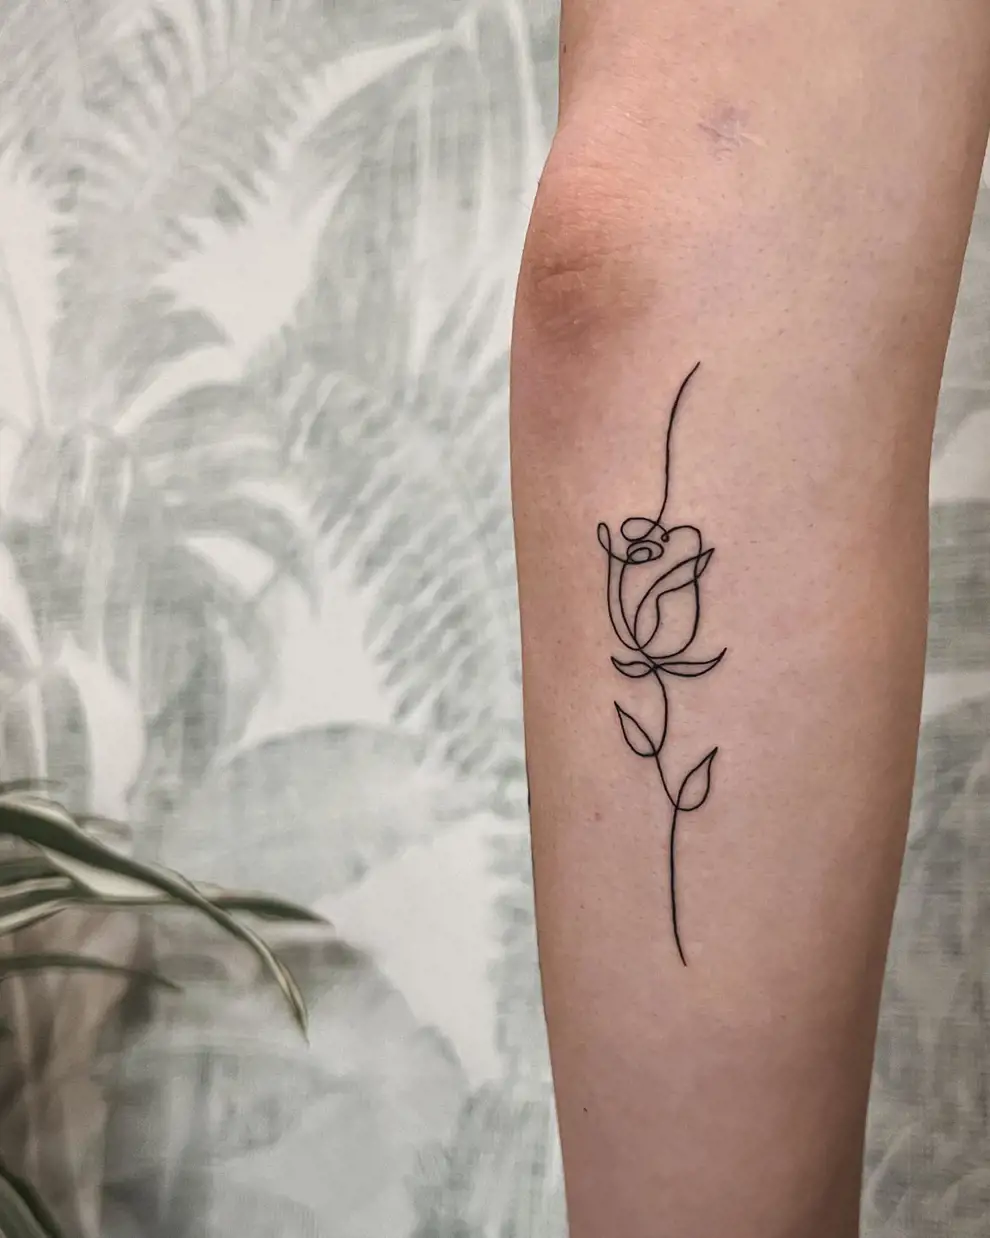 Tatuaje rosa minimalista: de un trazo